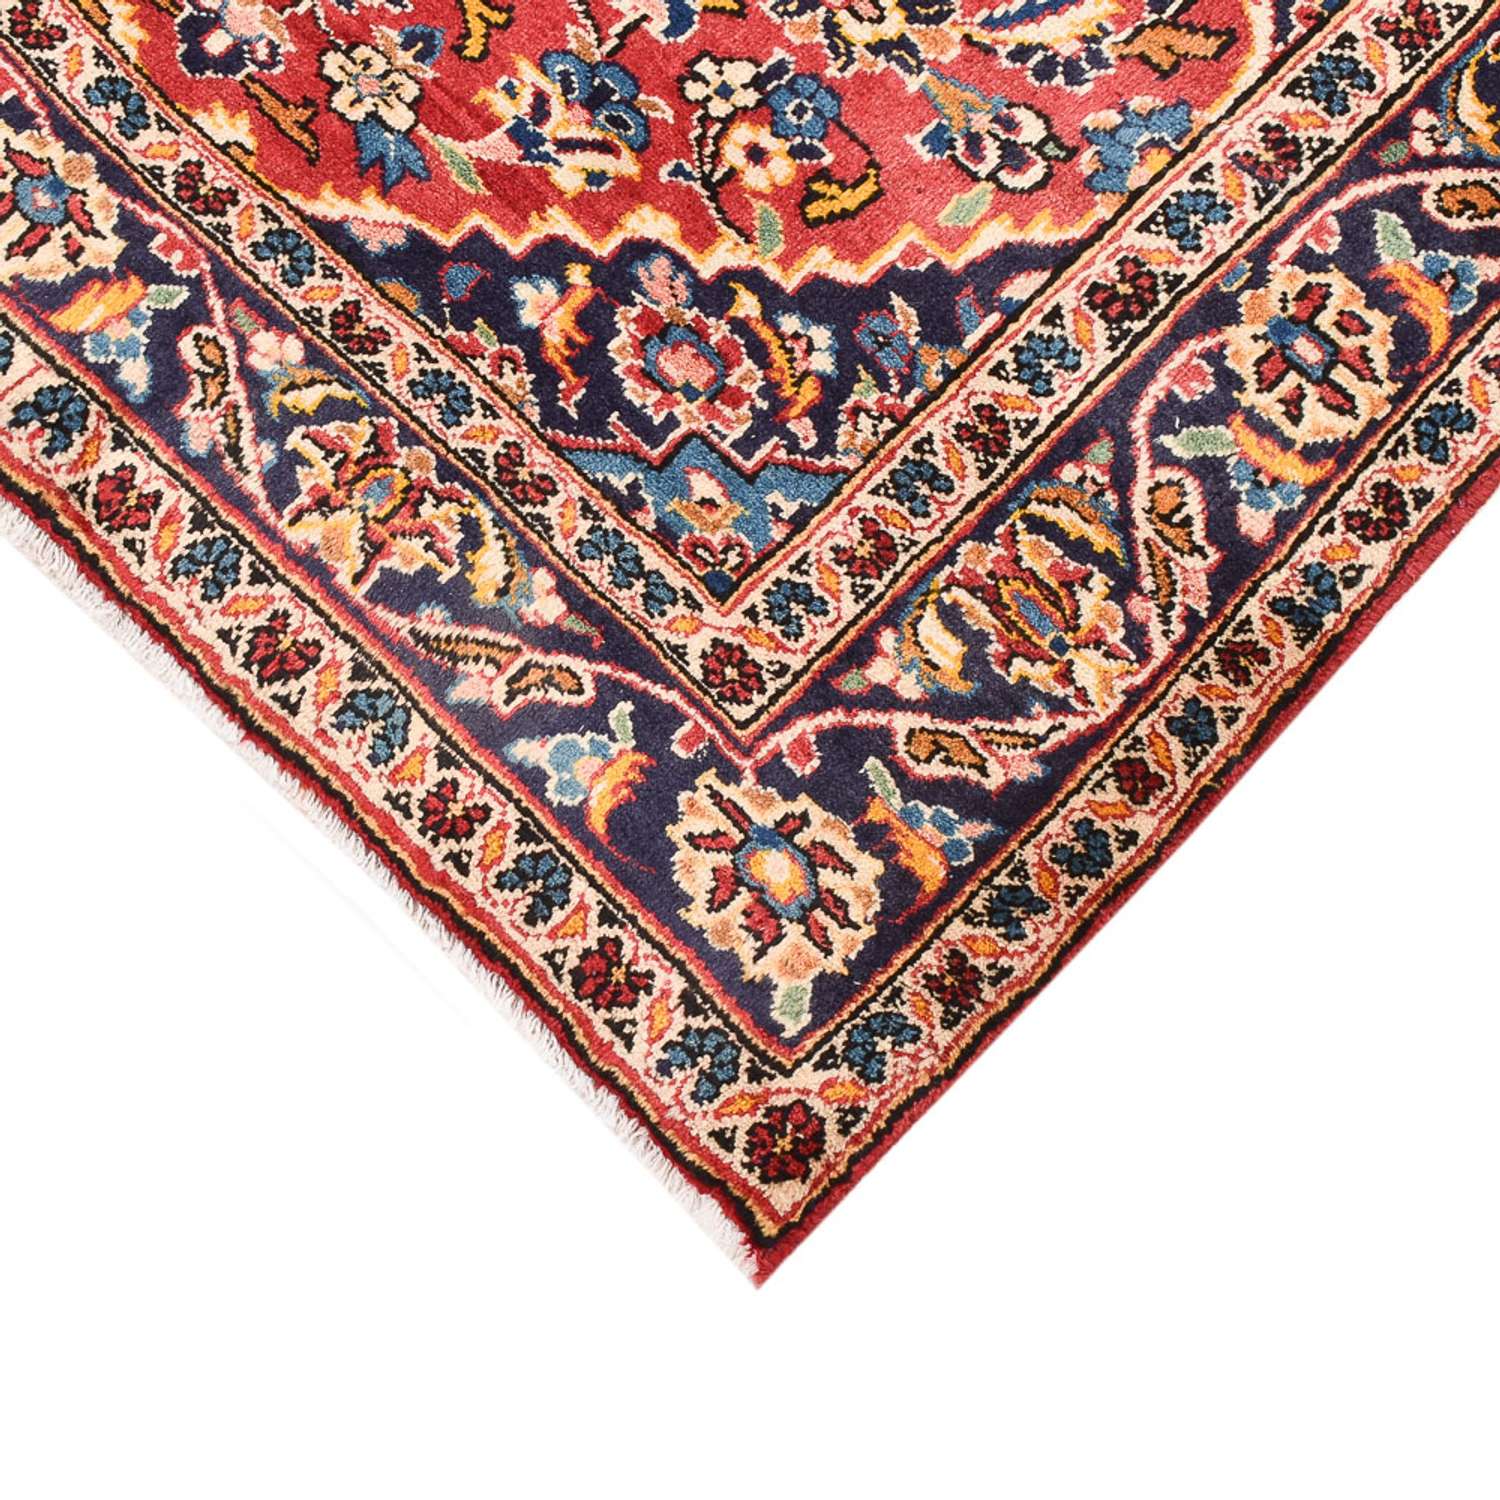 Tapis persan - Keshan - 142 x 100 cm - rouge